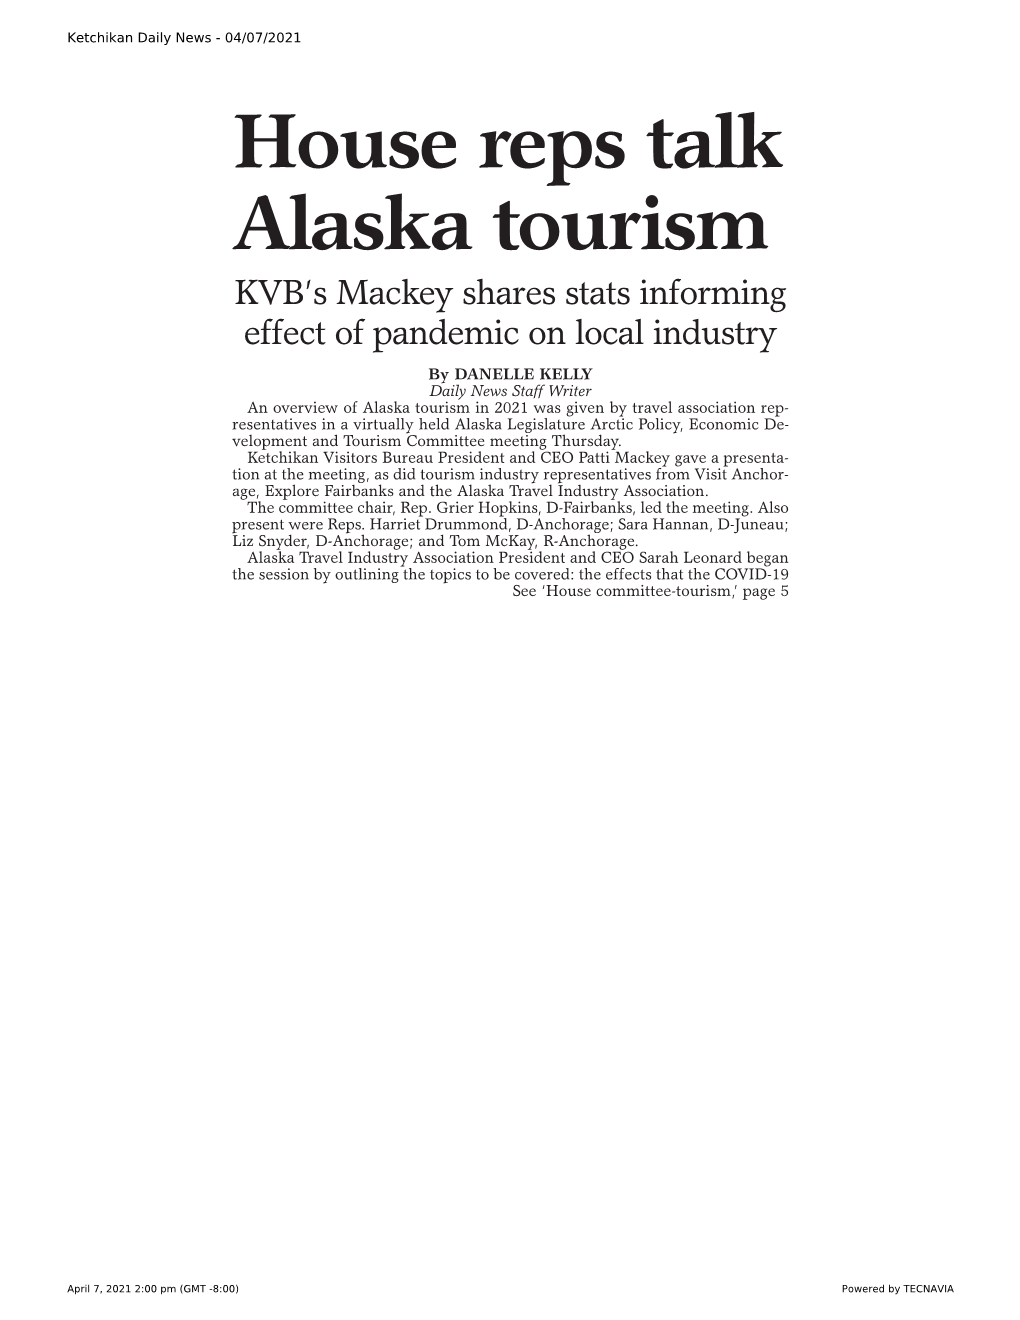 House Reps Talk Alaska Tourism